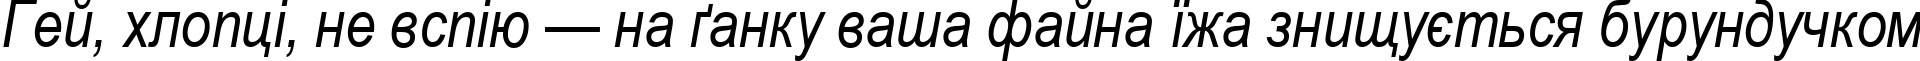 Пример написания шрифтом Ariac  Italic текста на украинском